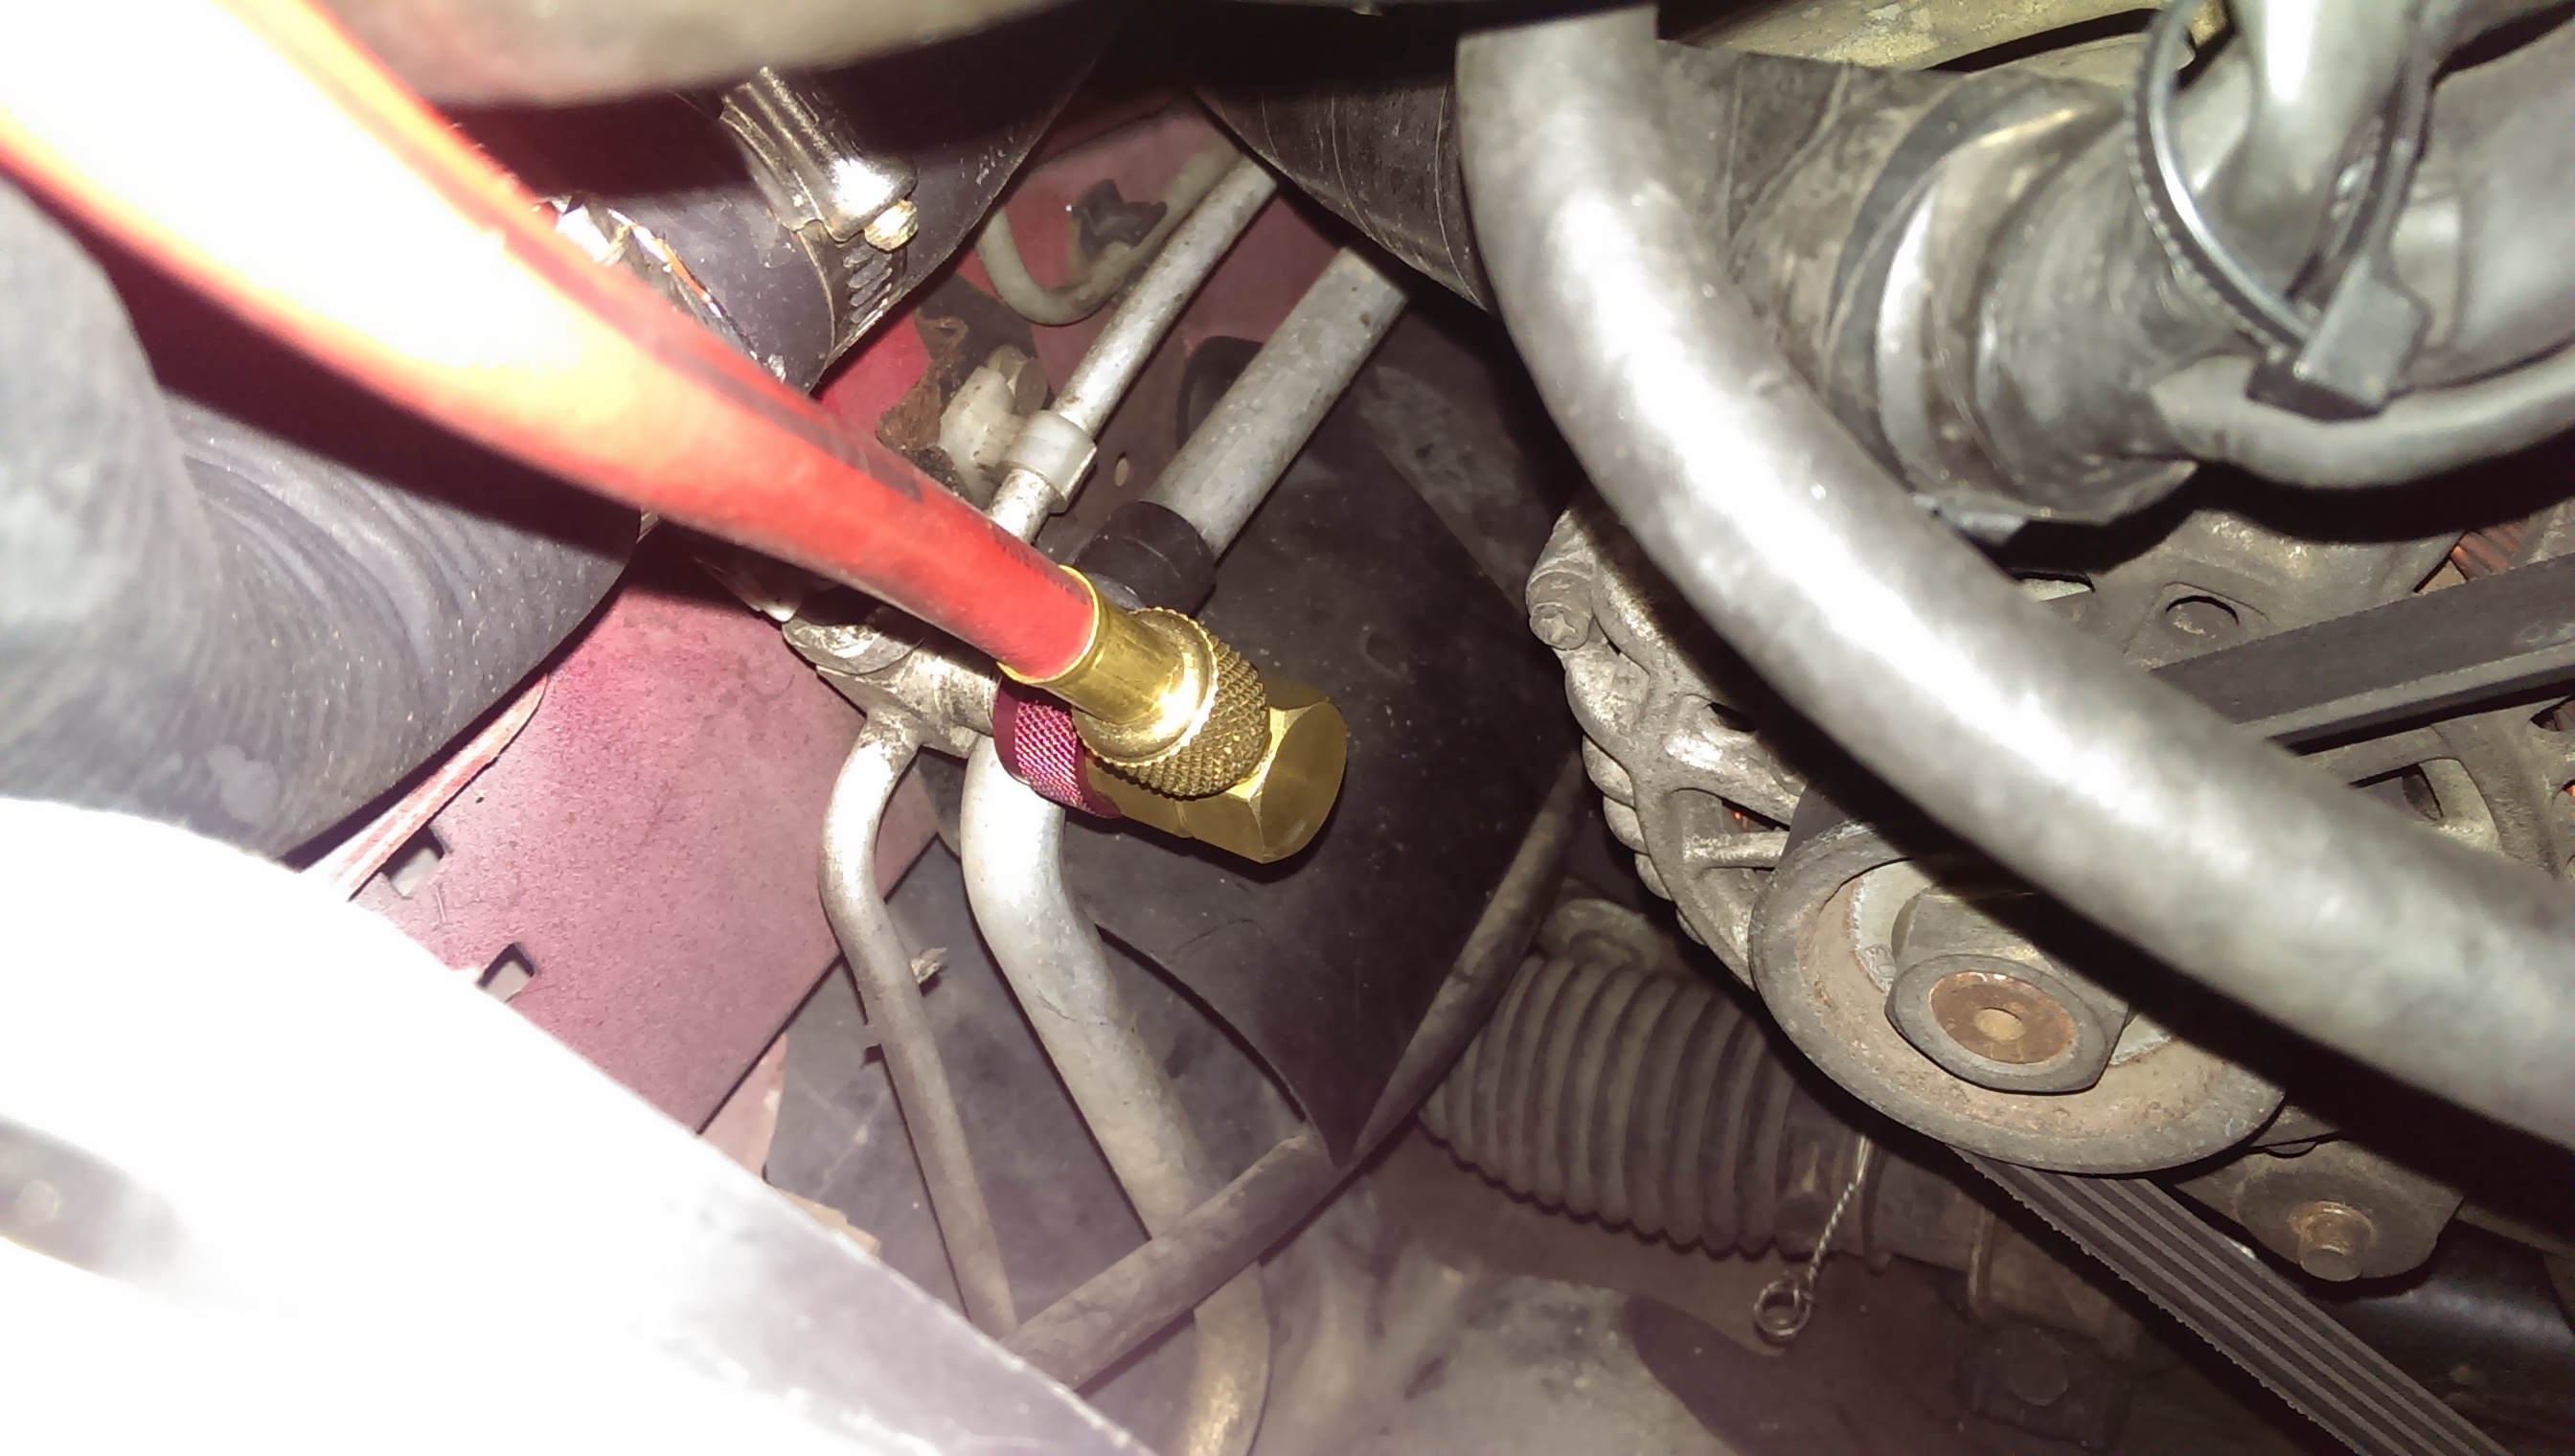 How do you repair a broken air conditioning hose on a car?